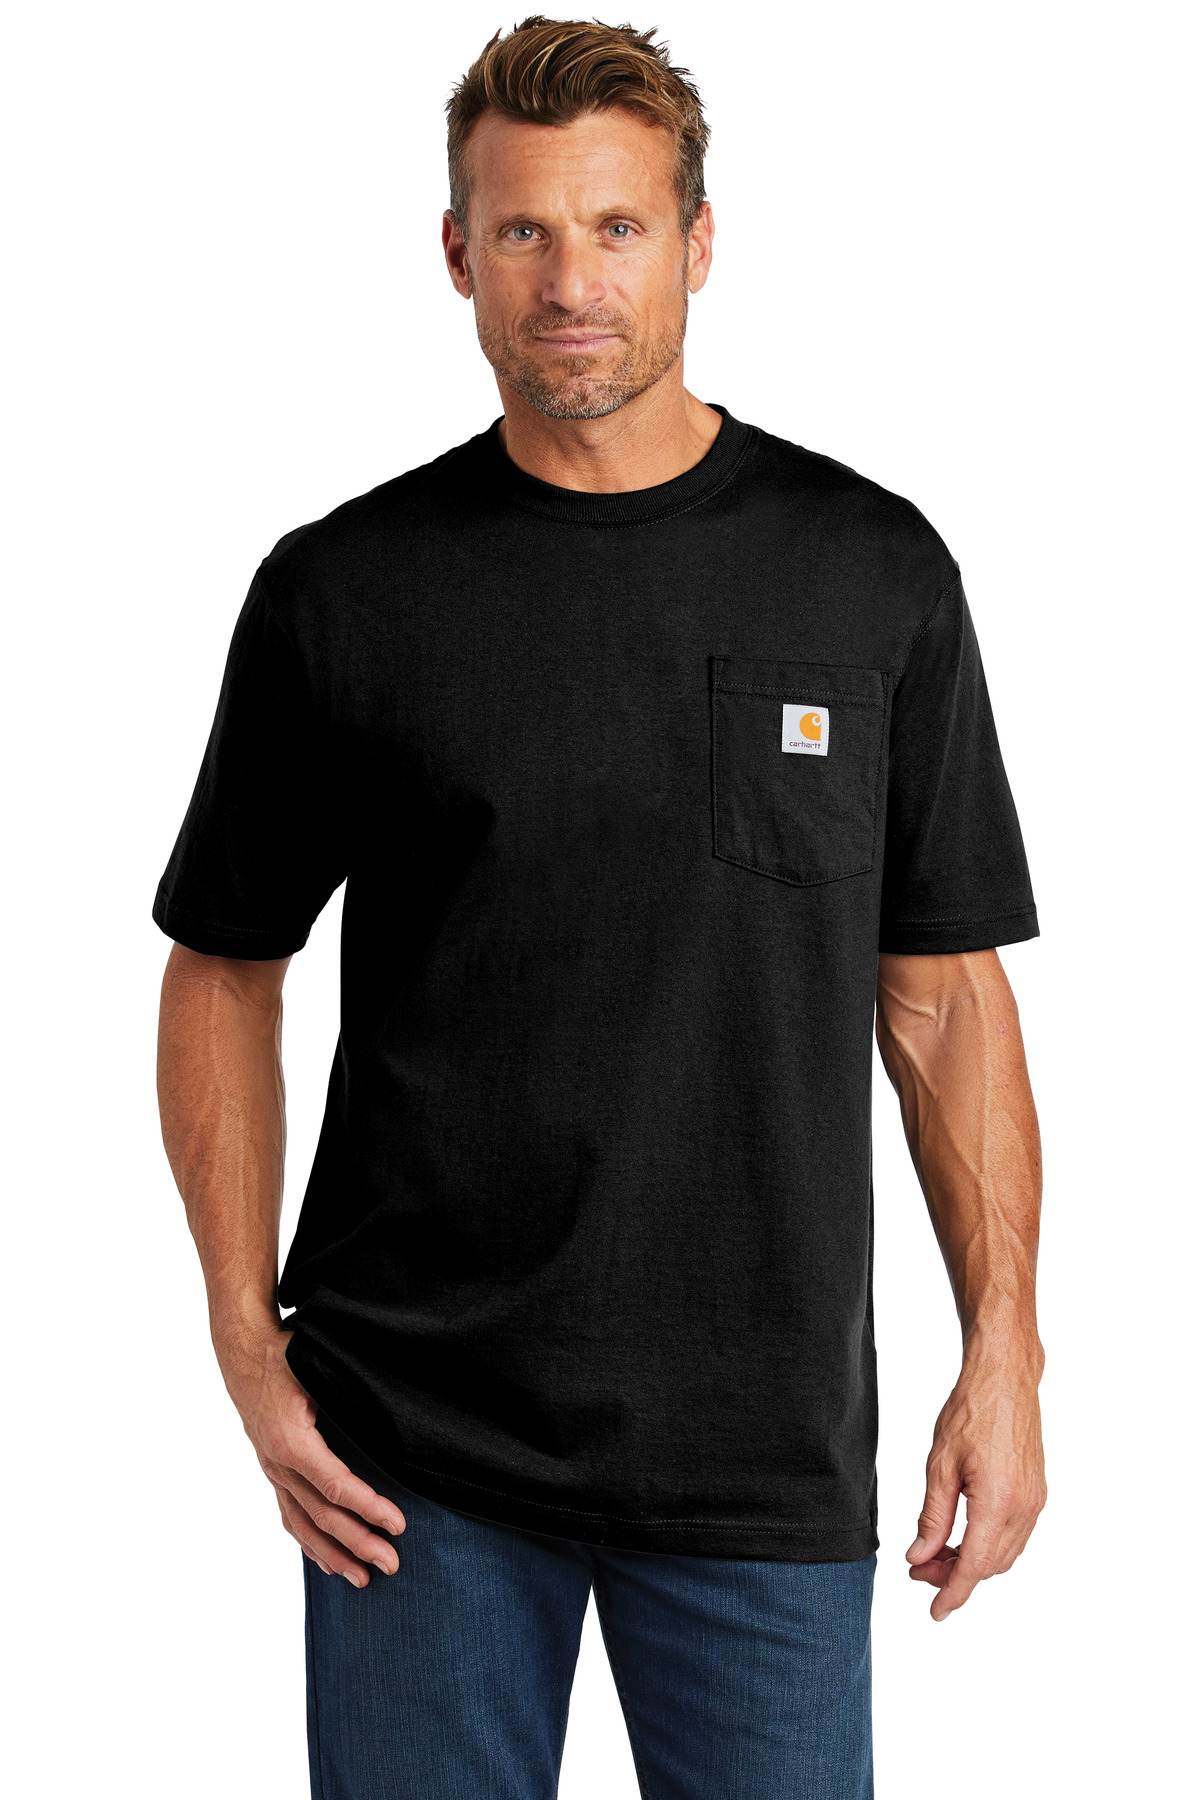 Carhartt Tall Workwear Pocket Short Sleeve T-Shirt-Carhartt